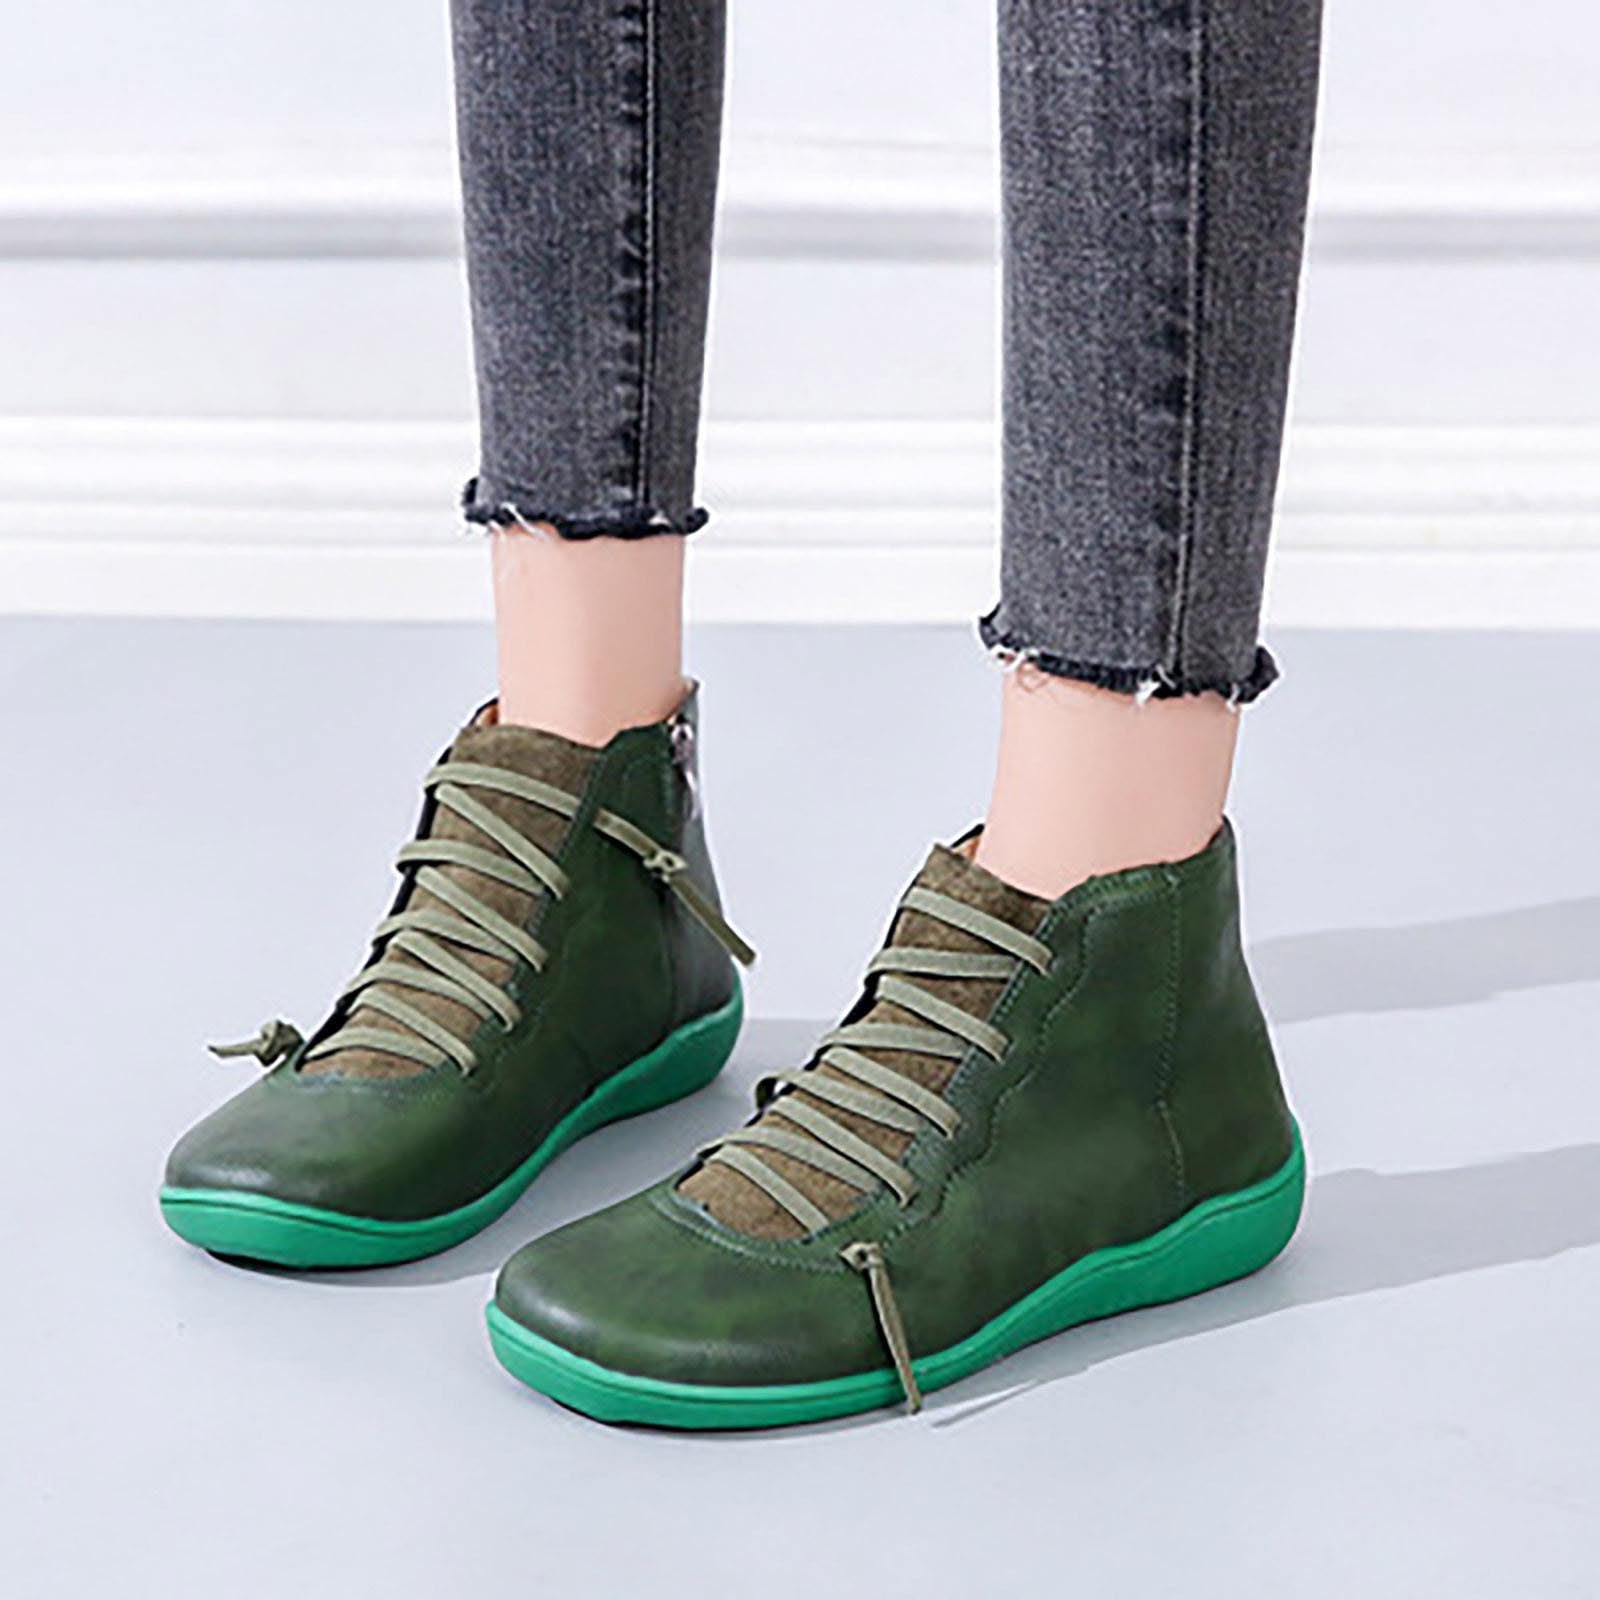 Women's Ankle Boots on Sale Low Heel- Flats Green 6.5 - Walmart.com